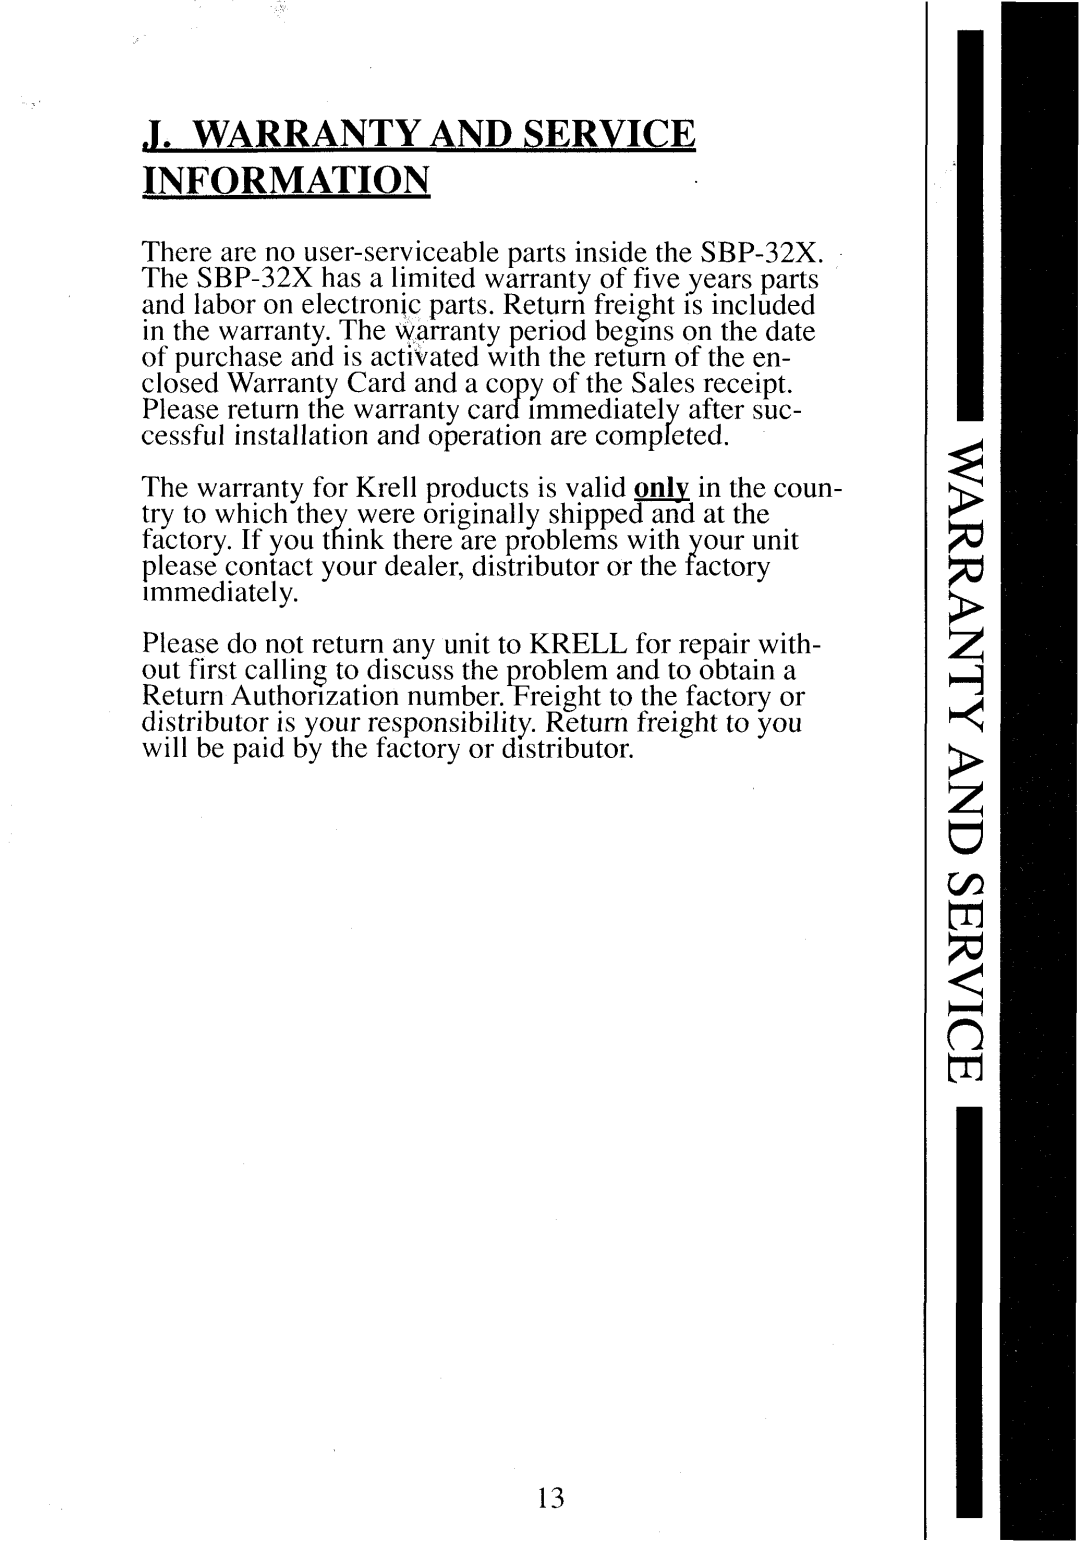 Krell Industries SBP-32X manual l. WARRANTYAND,,SERVICE INFORMATION 